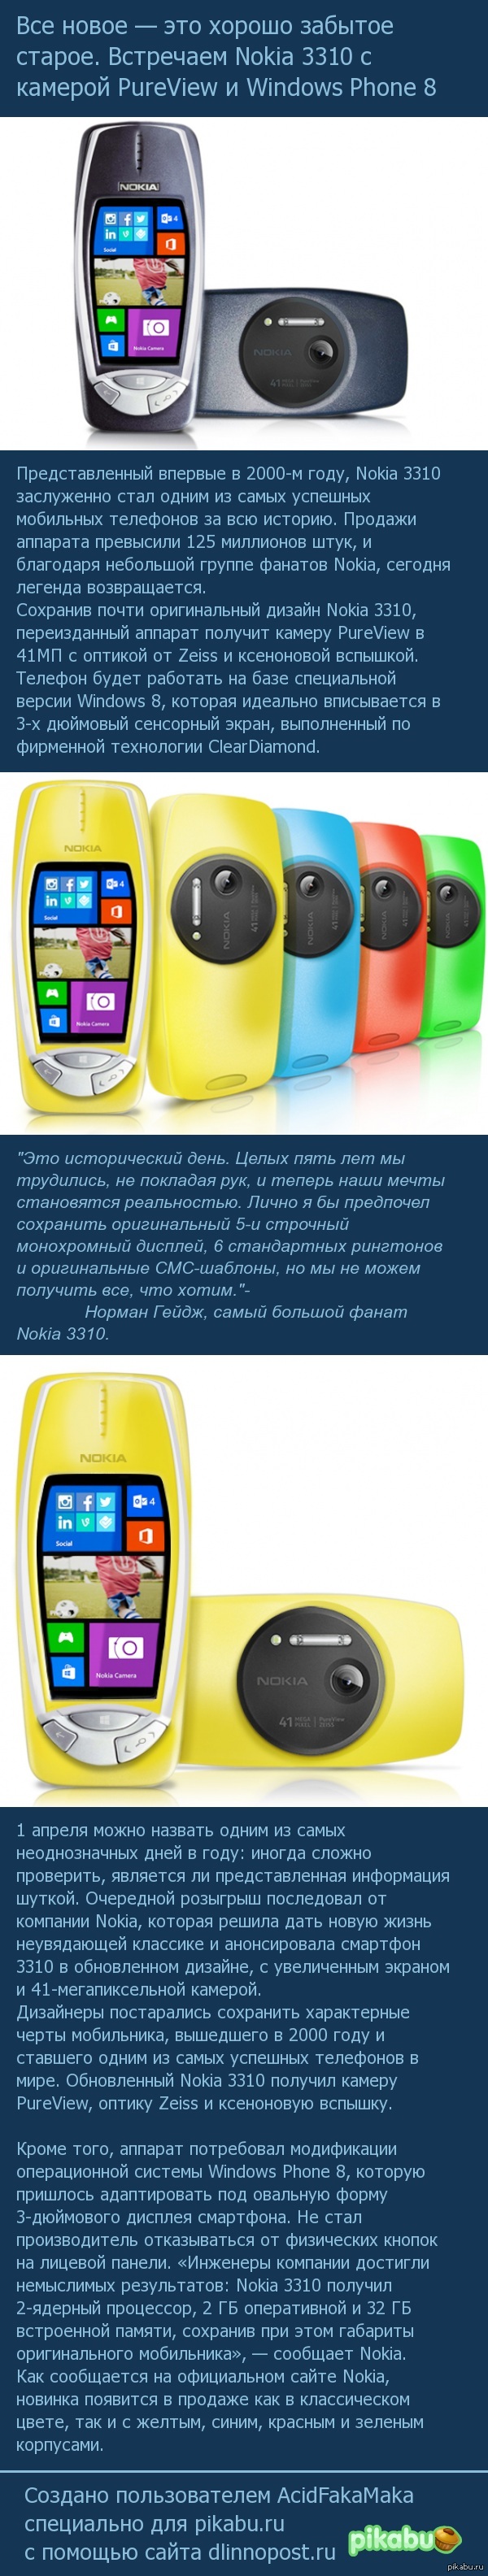  Nokia 3310 c  PureView  Windows Phone 8 